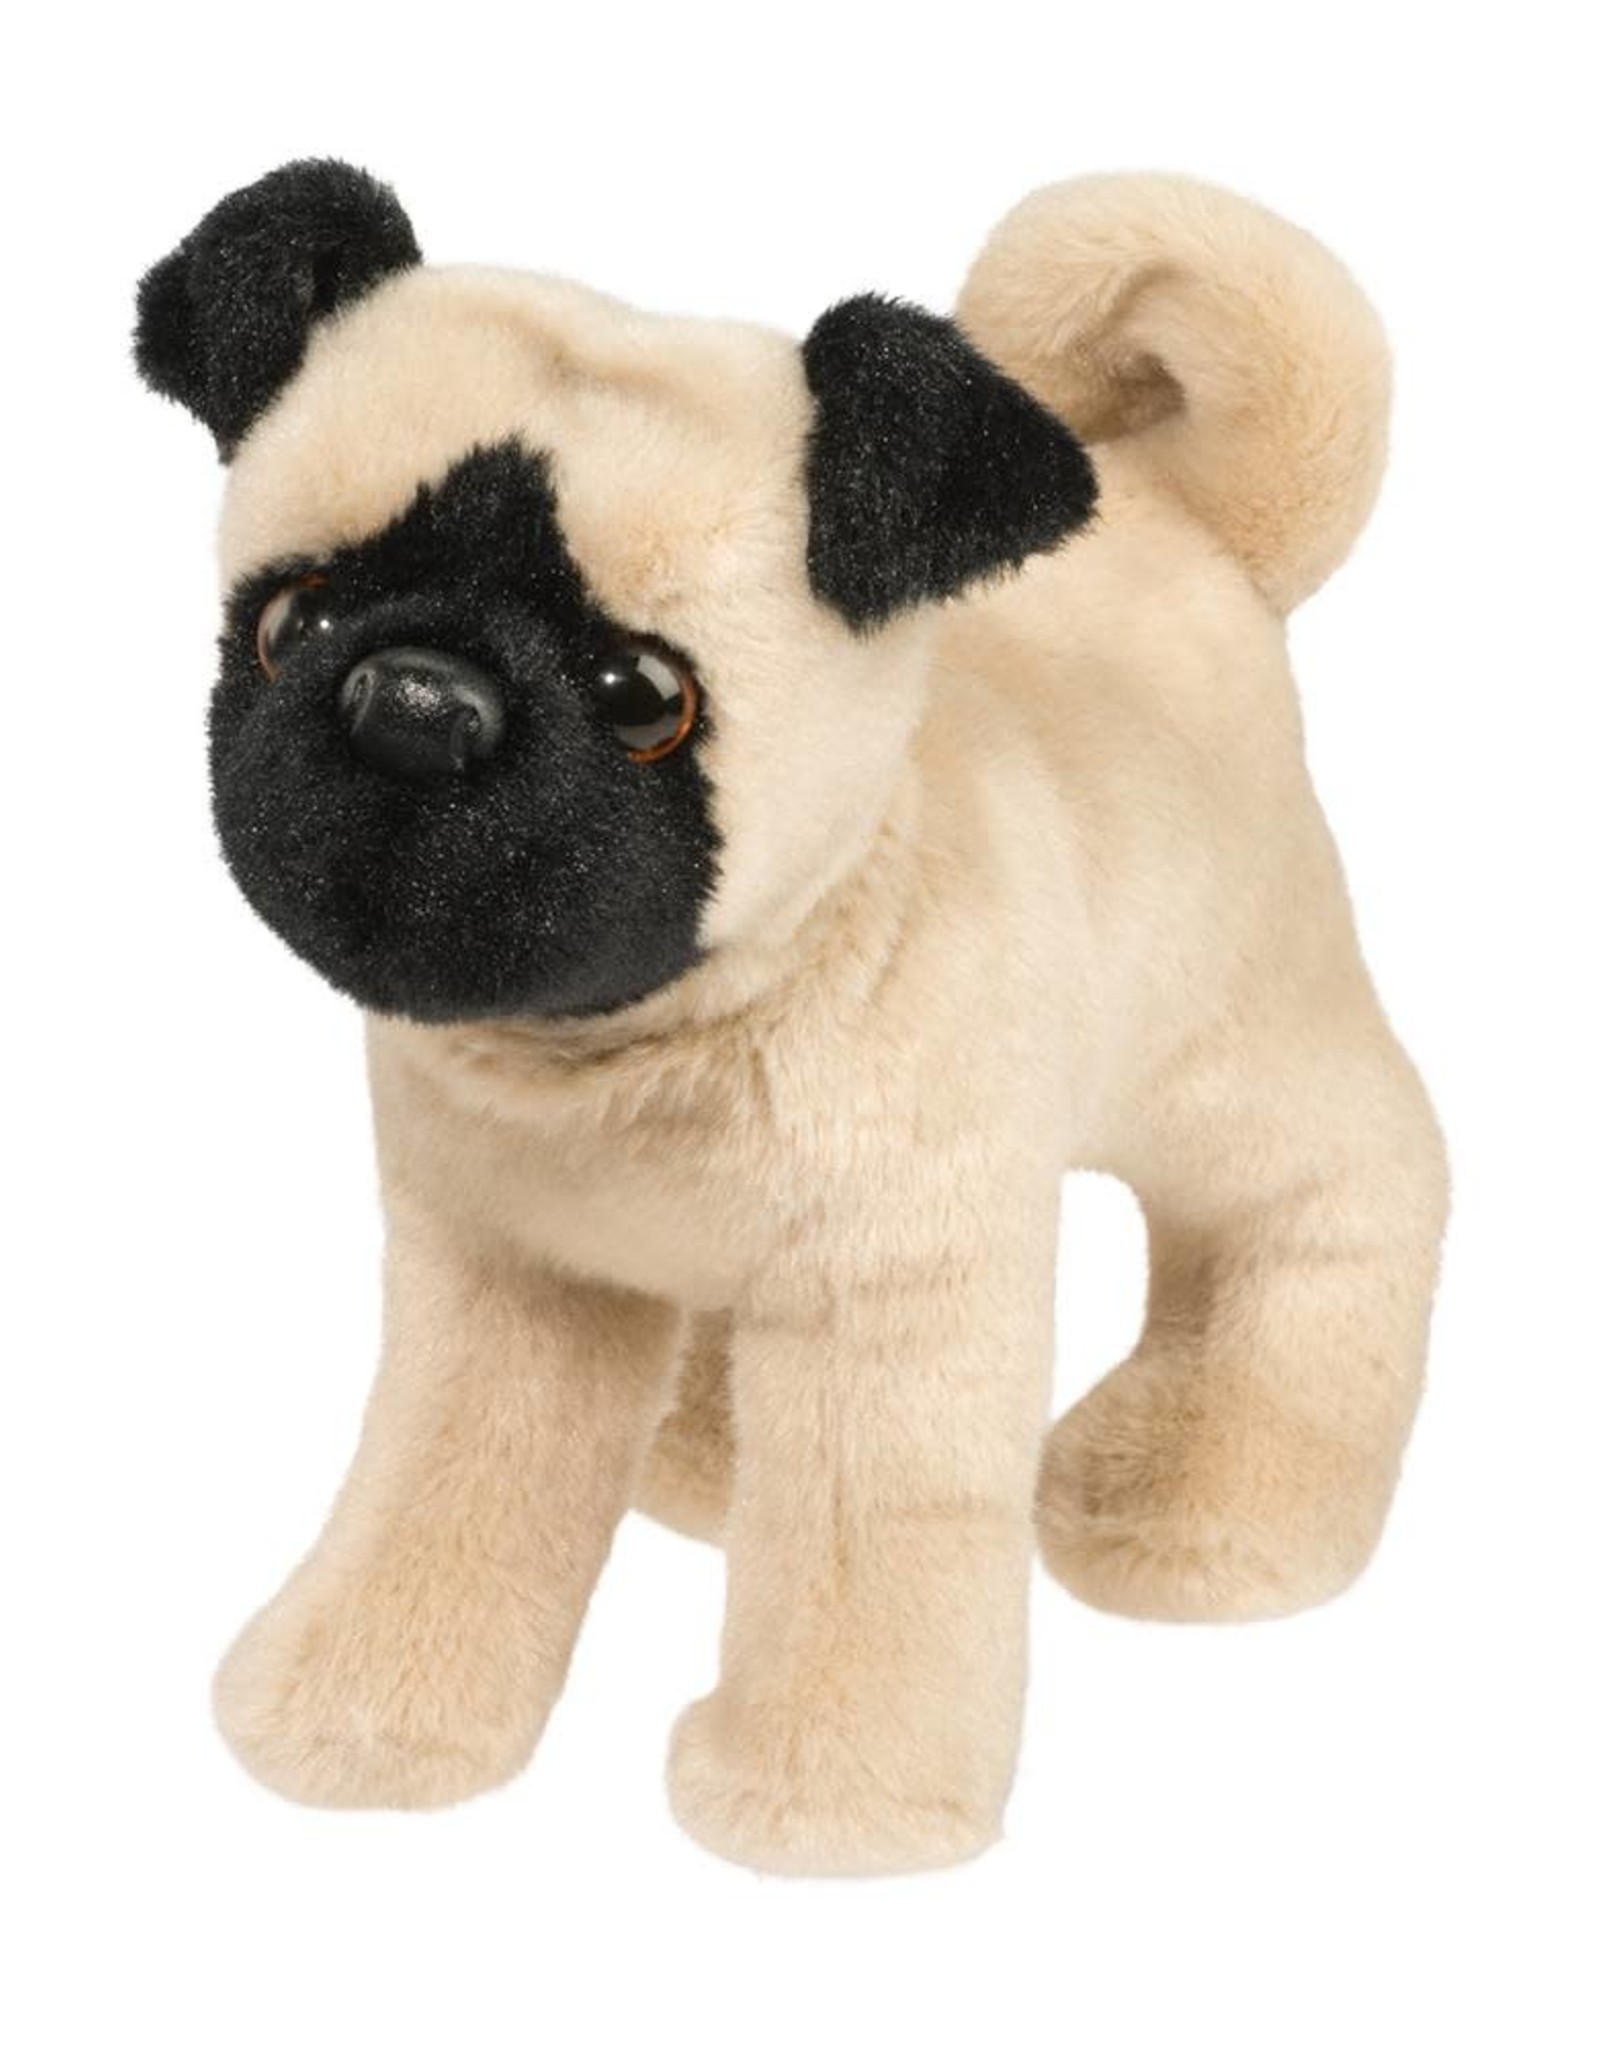 Douglas Hamilton Pug Stuffed Animal